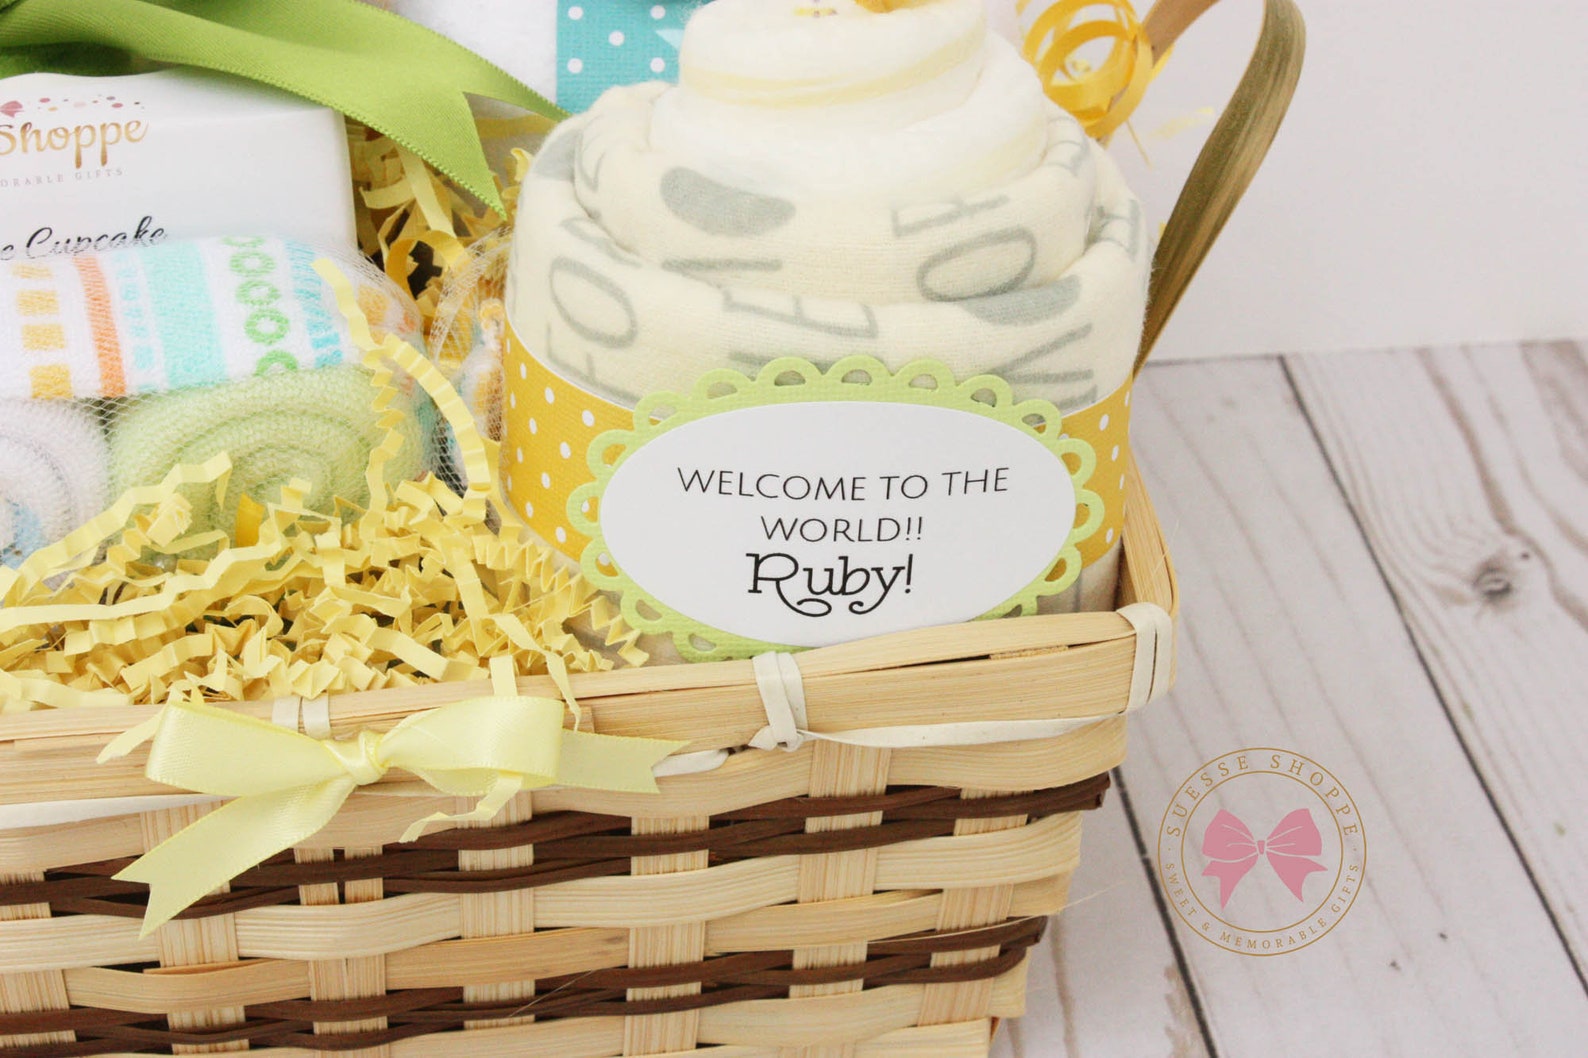 Gender neutral baby gift basket Congratulations pregnancy